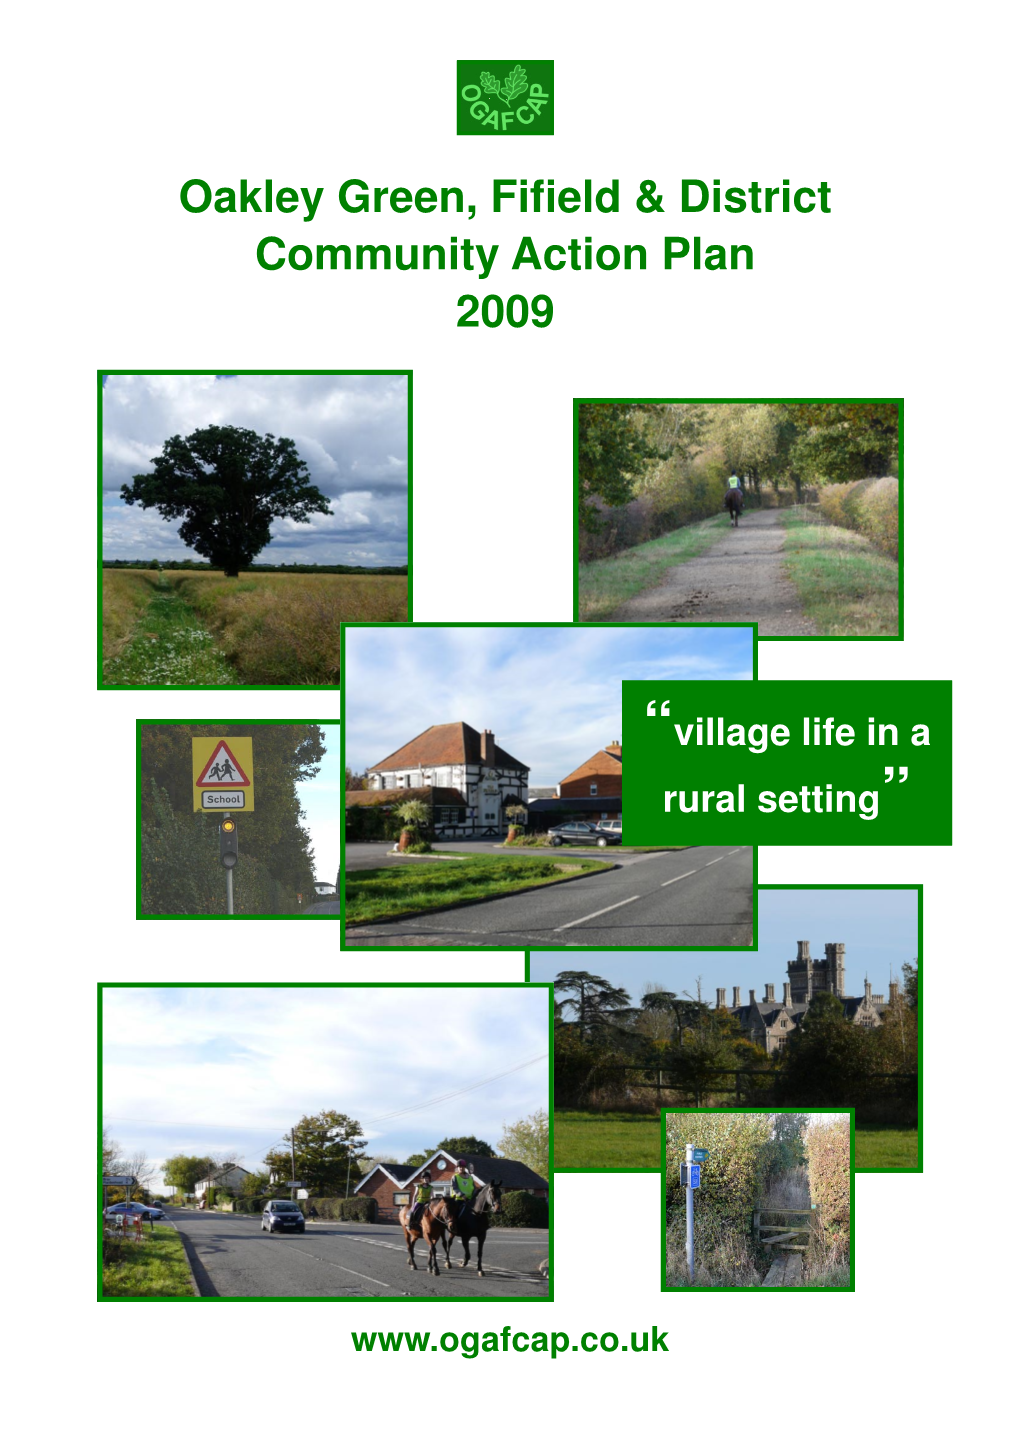 Oakley Green, Fifield & District Community Action Plan 2009